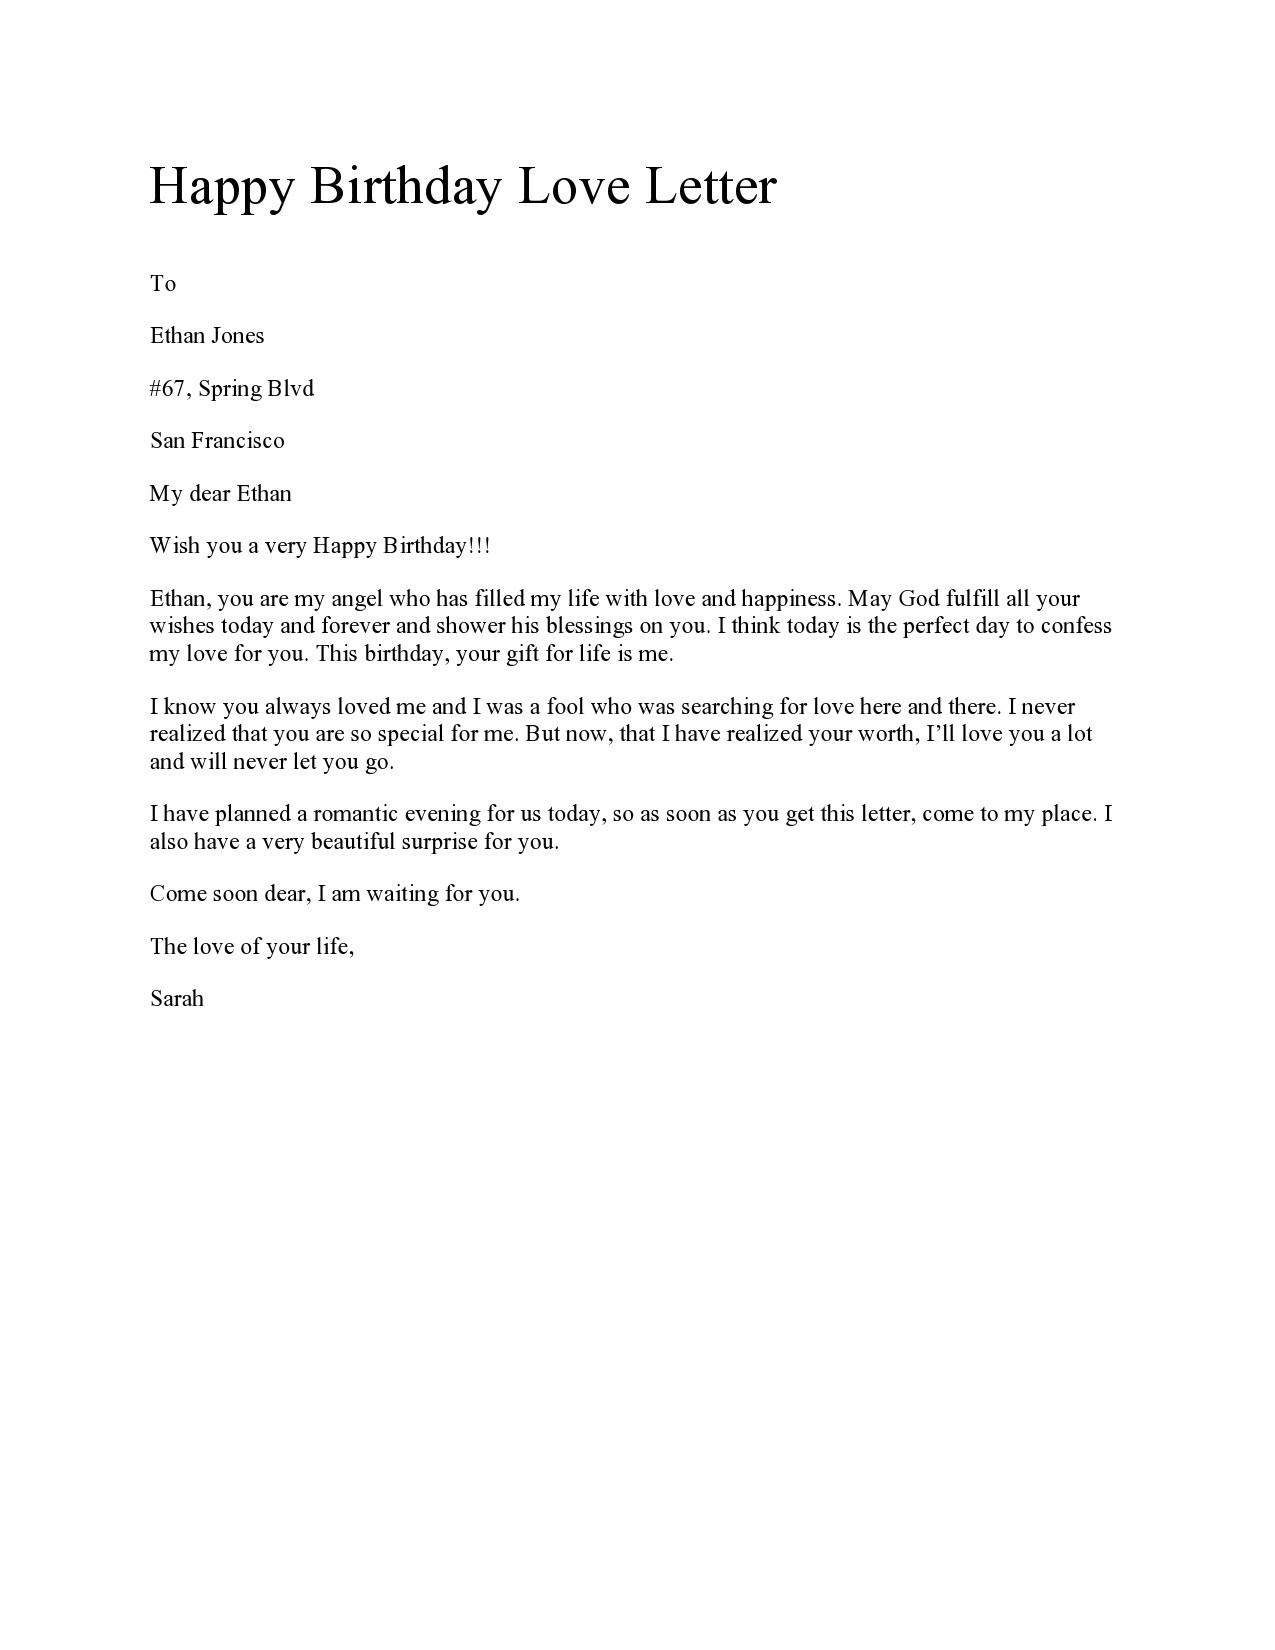 Free happy birthday letter 22